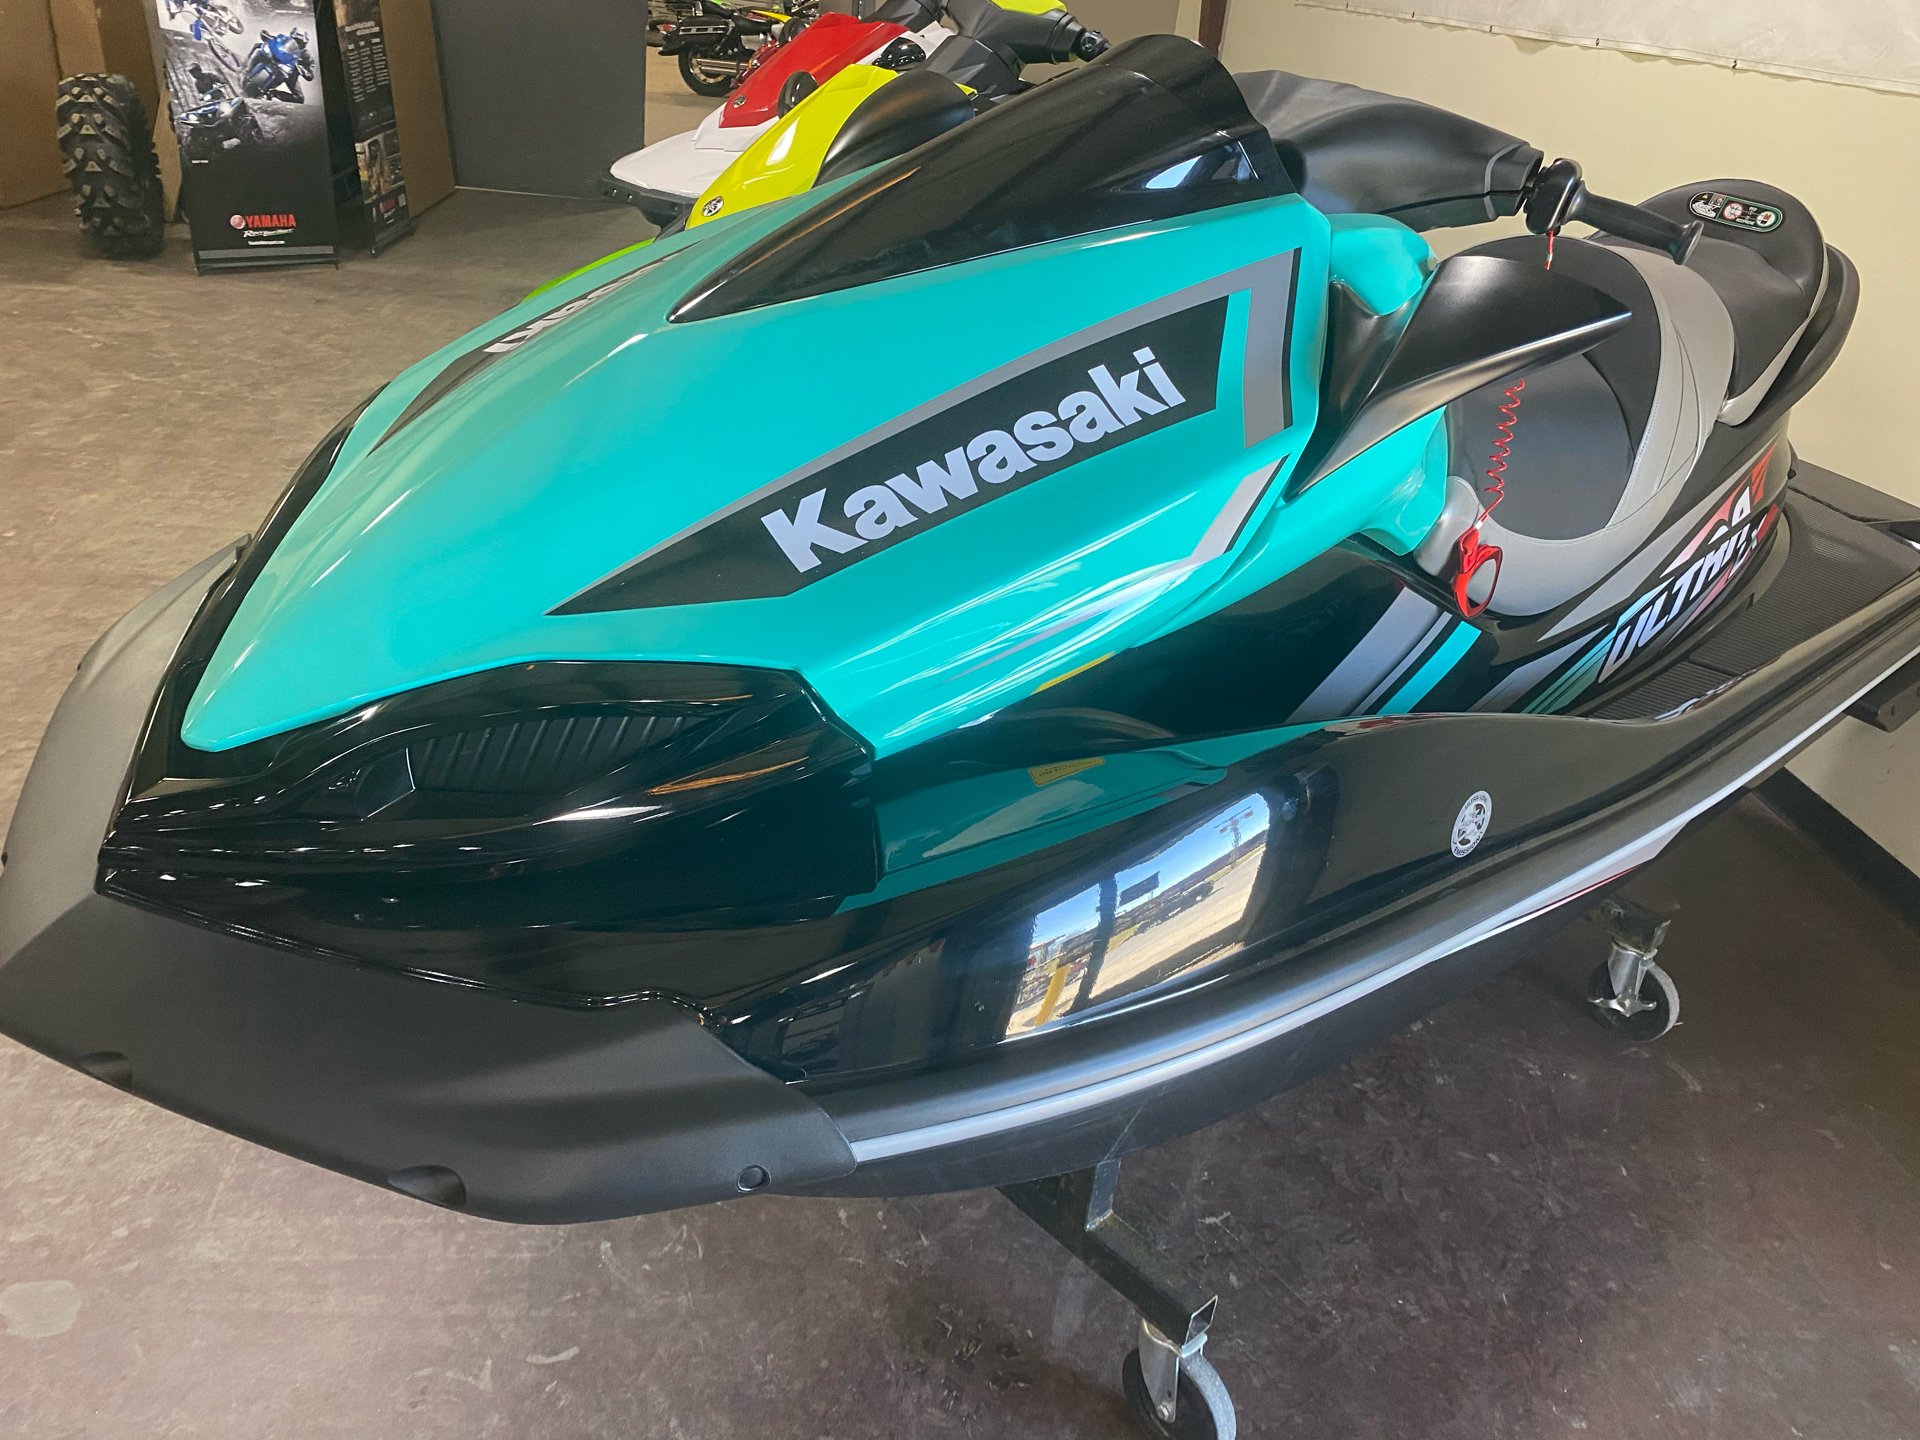 New 2021 Kawasaki Ski LX Watercraft in Statesville, NC | 63K021 - greatwesternmotorcycles.com